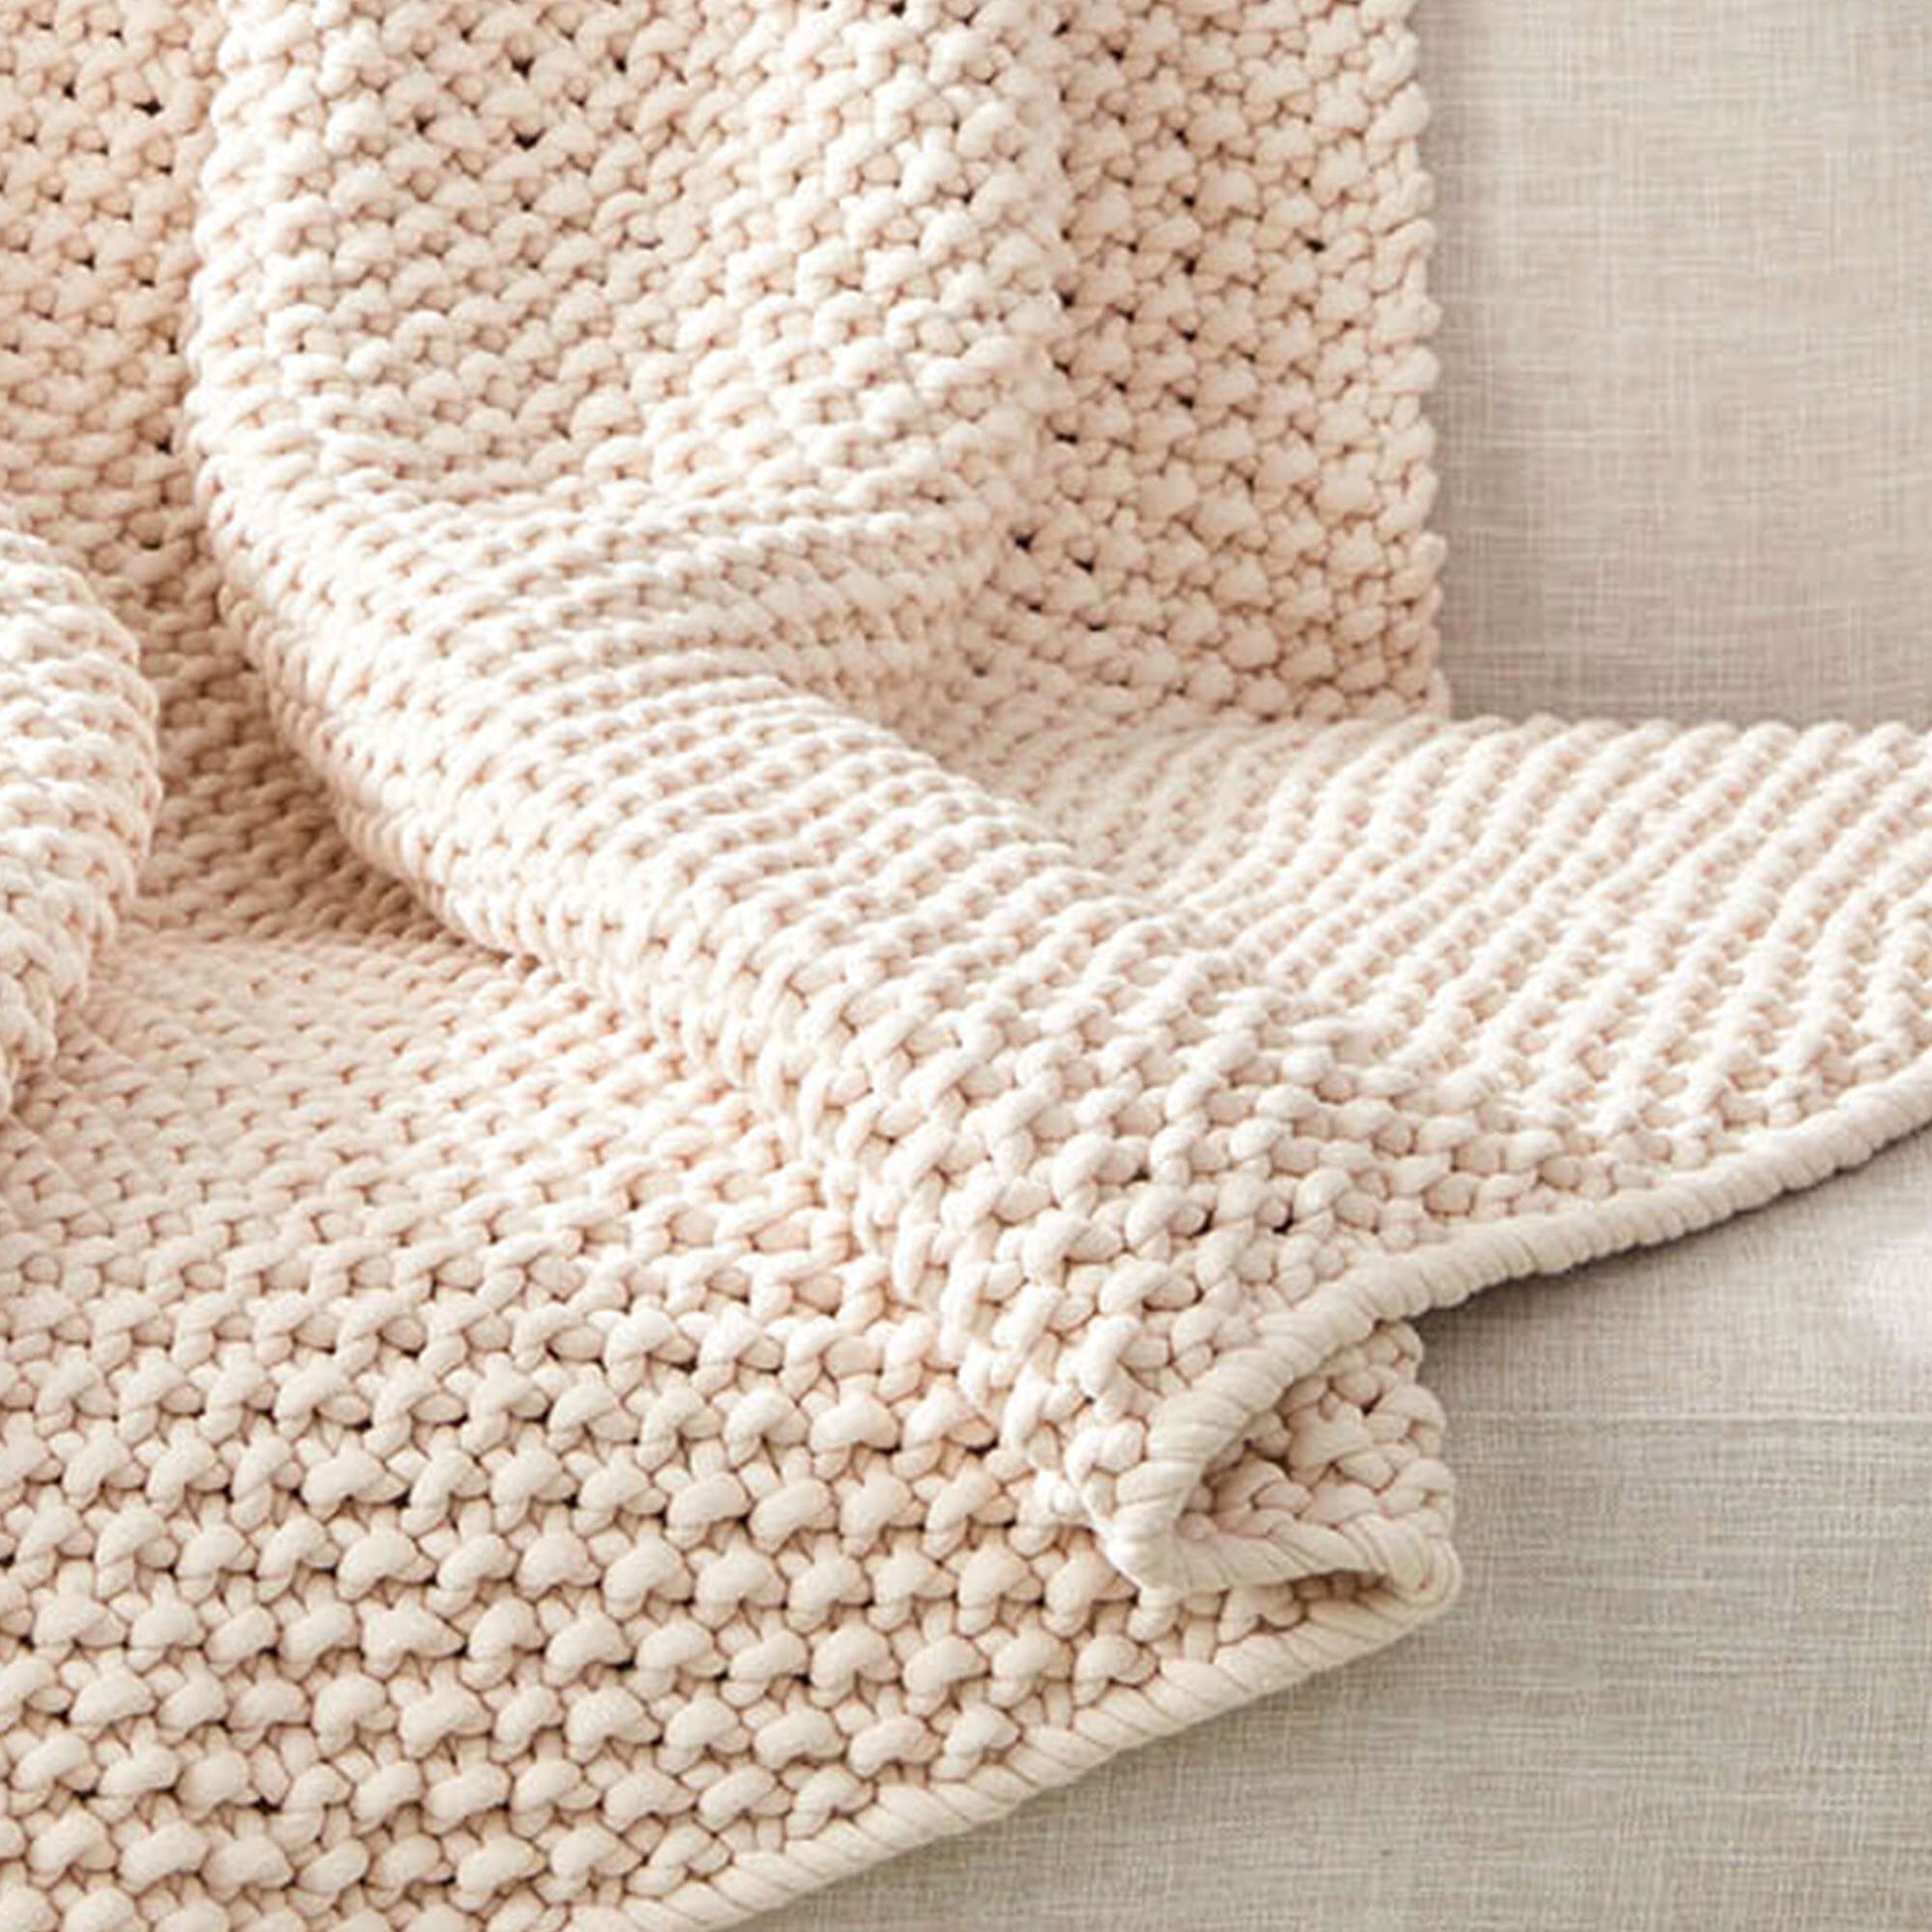 Bernat Seed Stitch Throw Knit Blanket made in Bernat Maker Big yarn